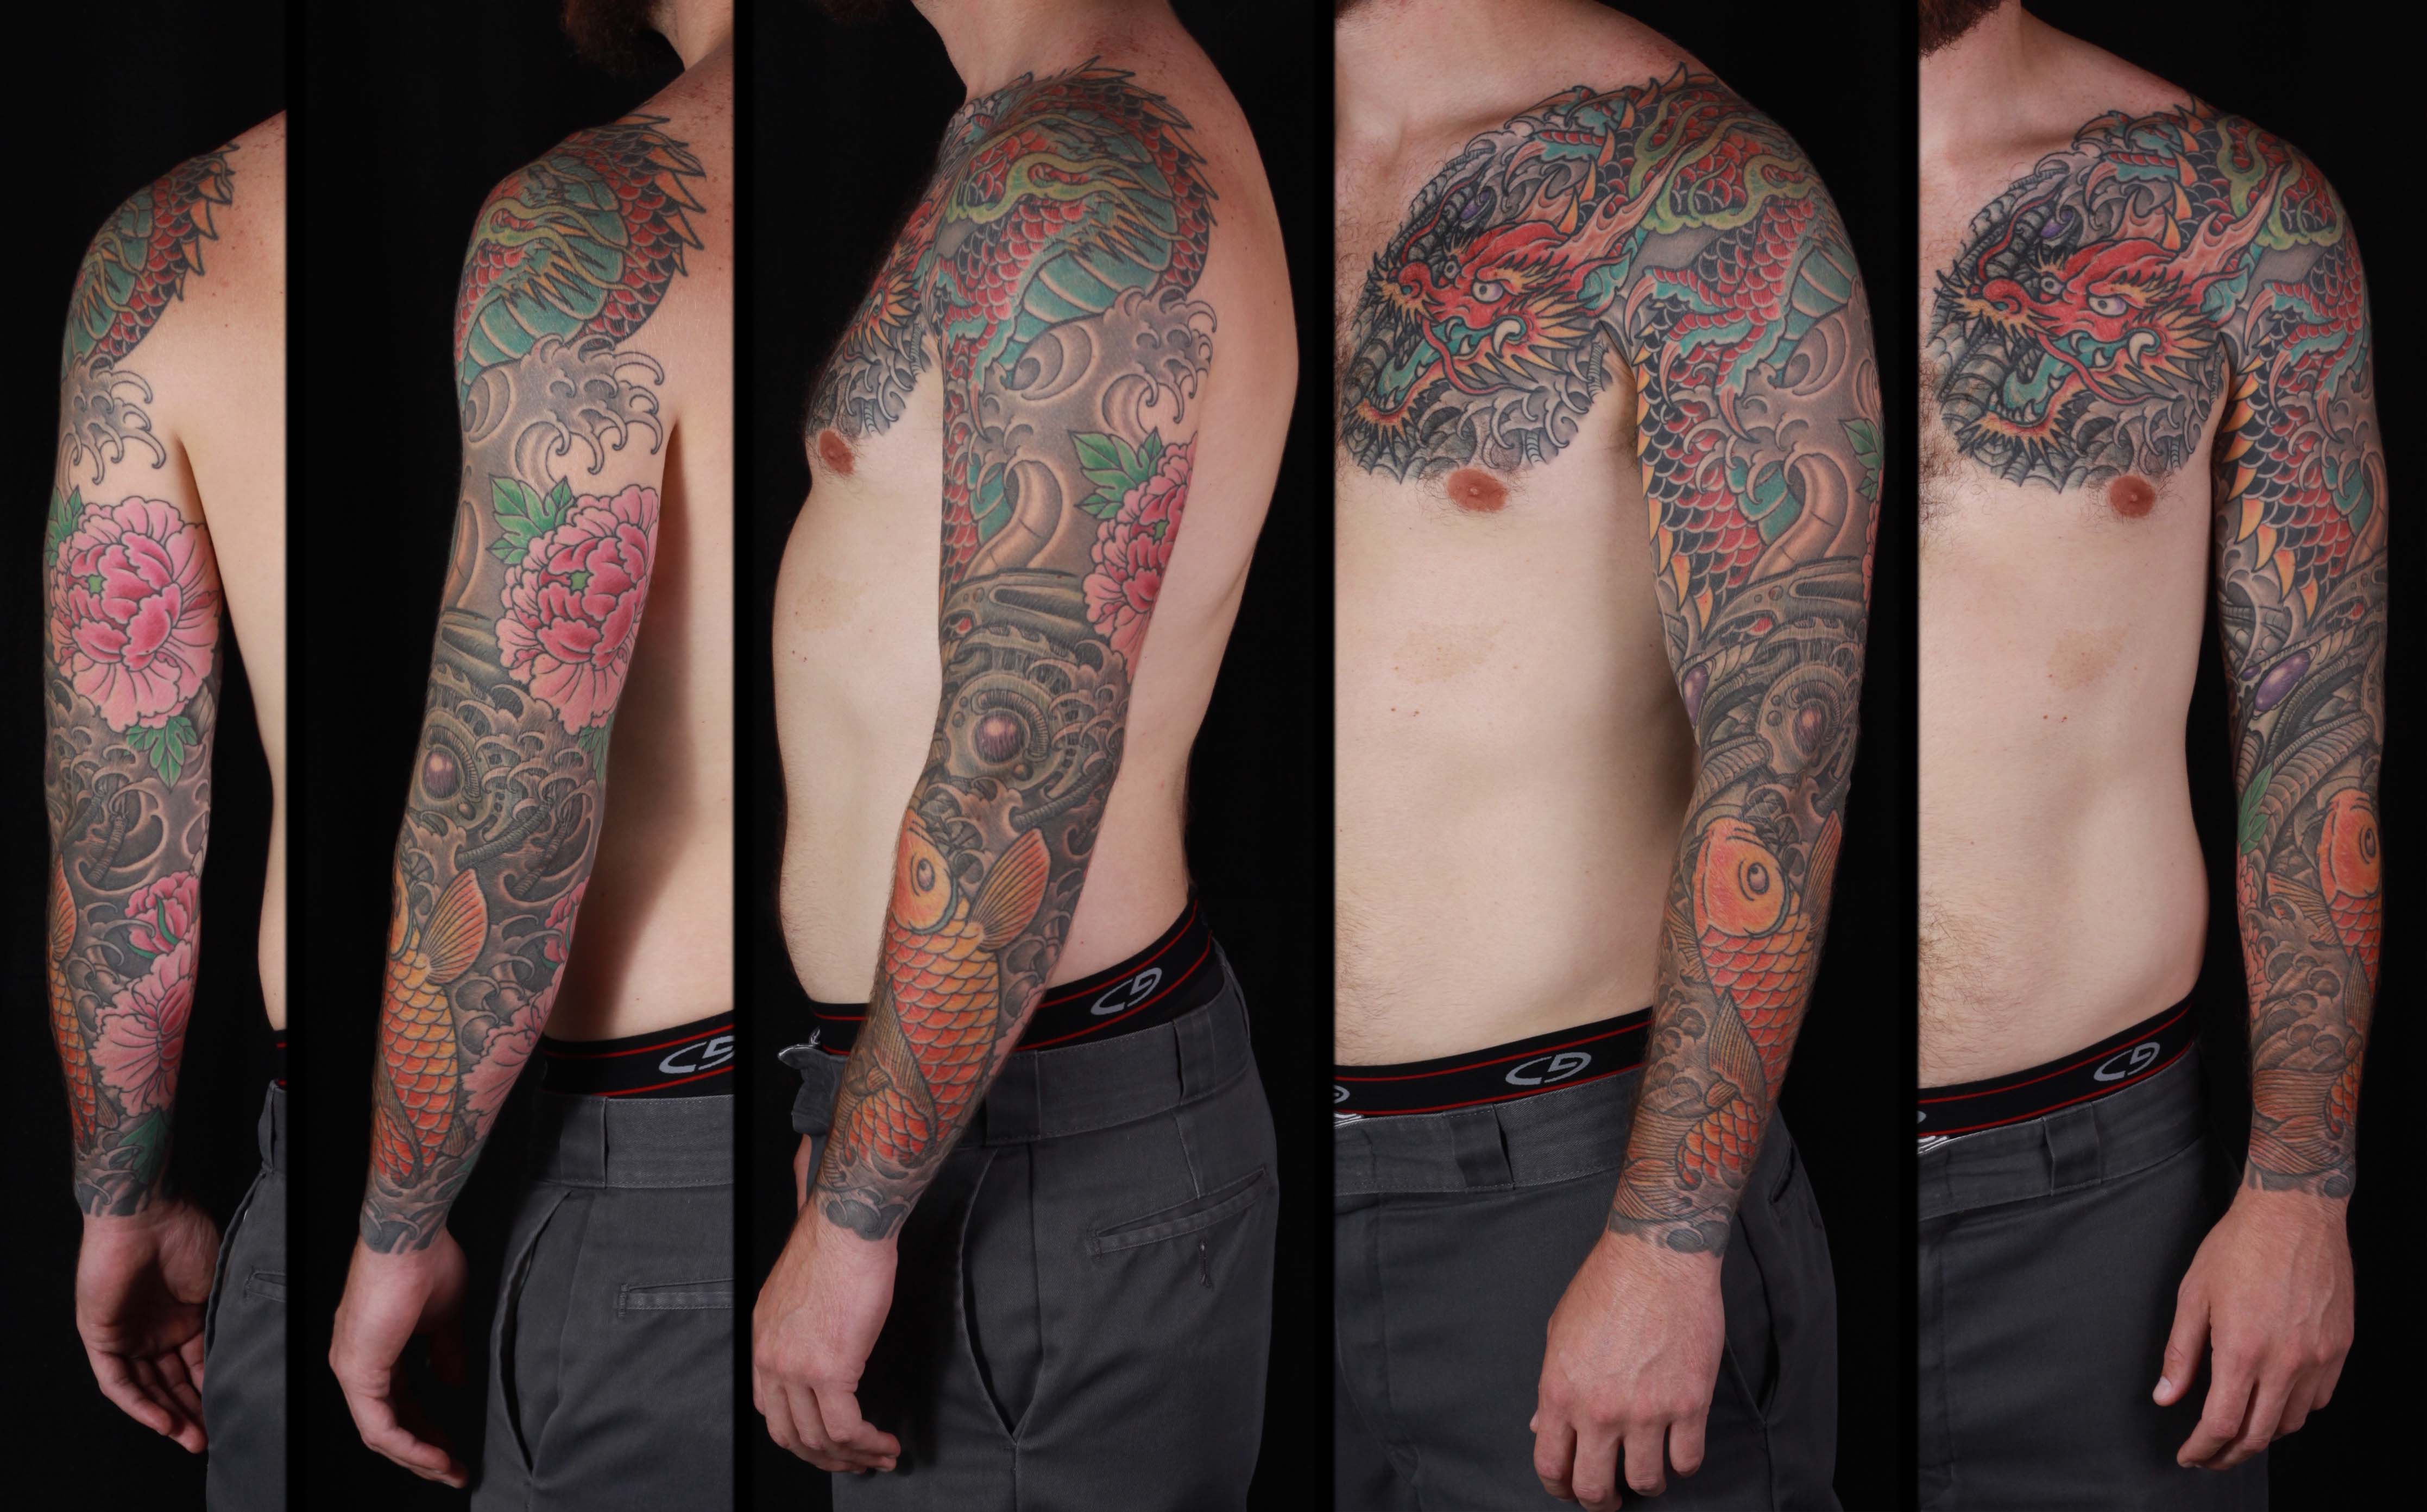 brian-thurow-dedication-tattoo-japanese-dragon-biomech-koi-water-waves-sleeve-arm-chest